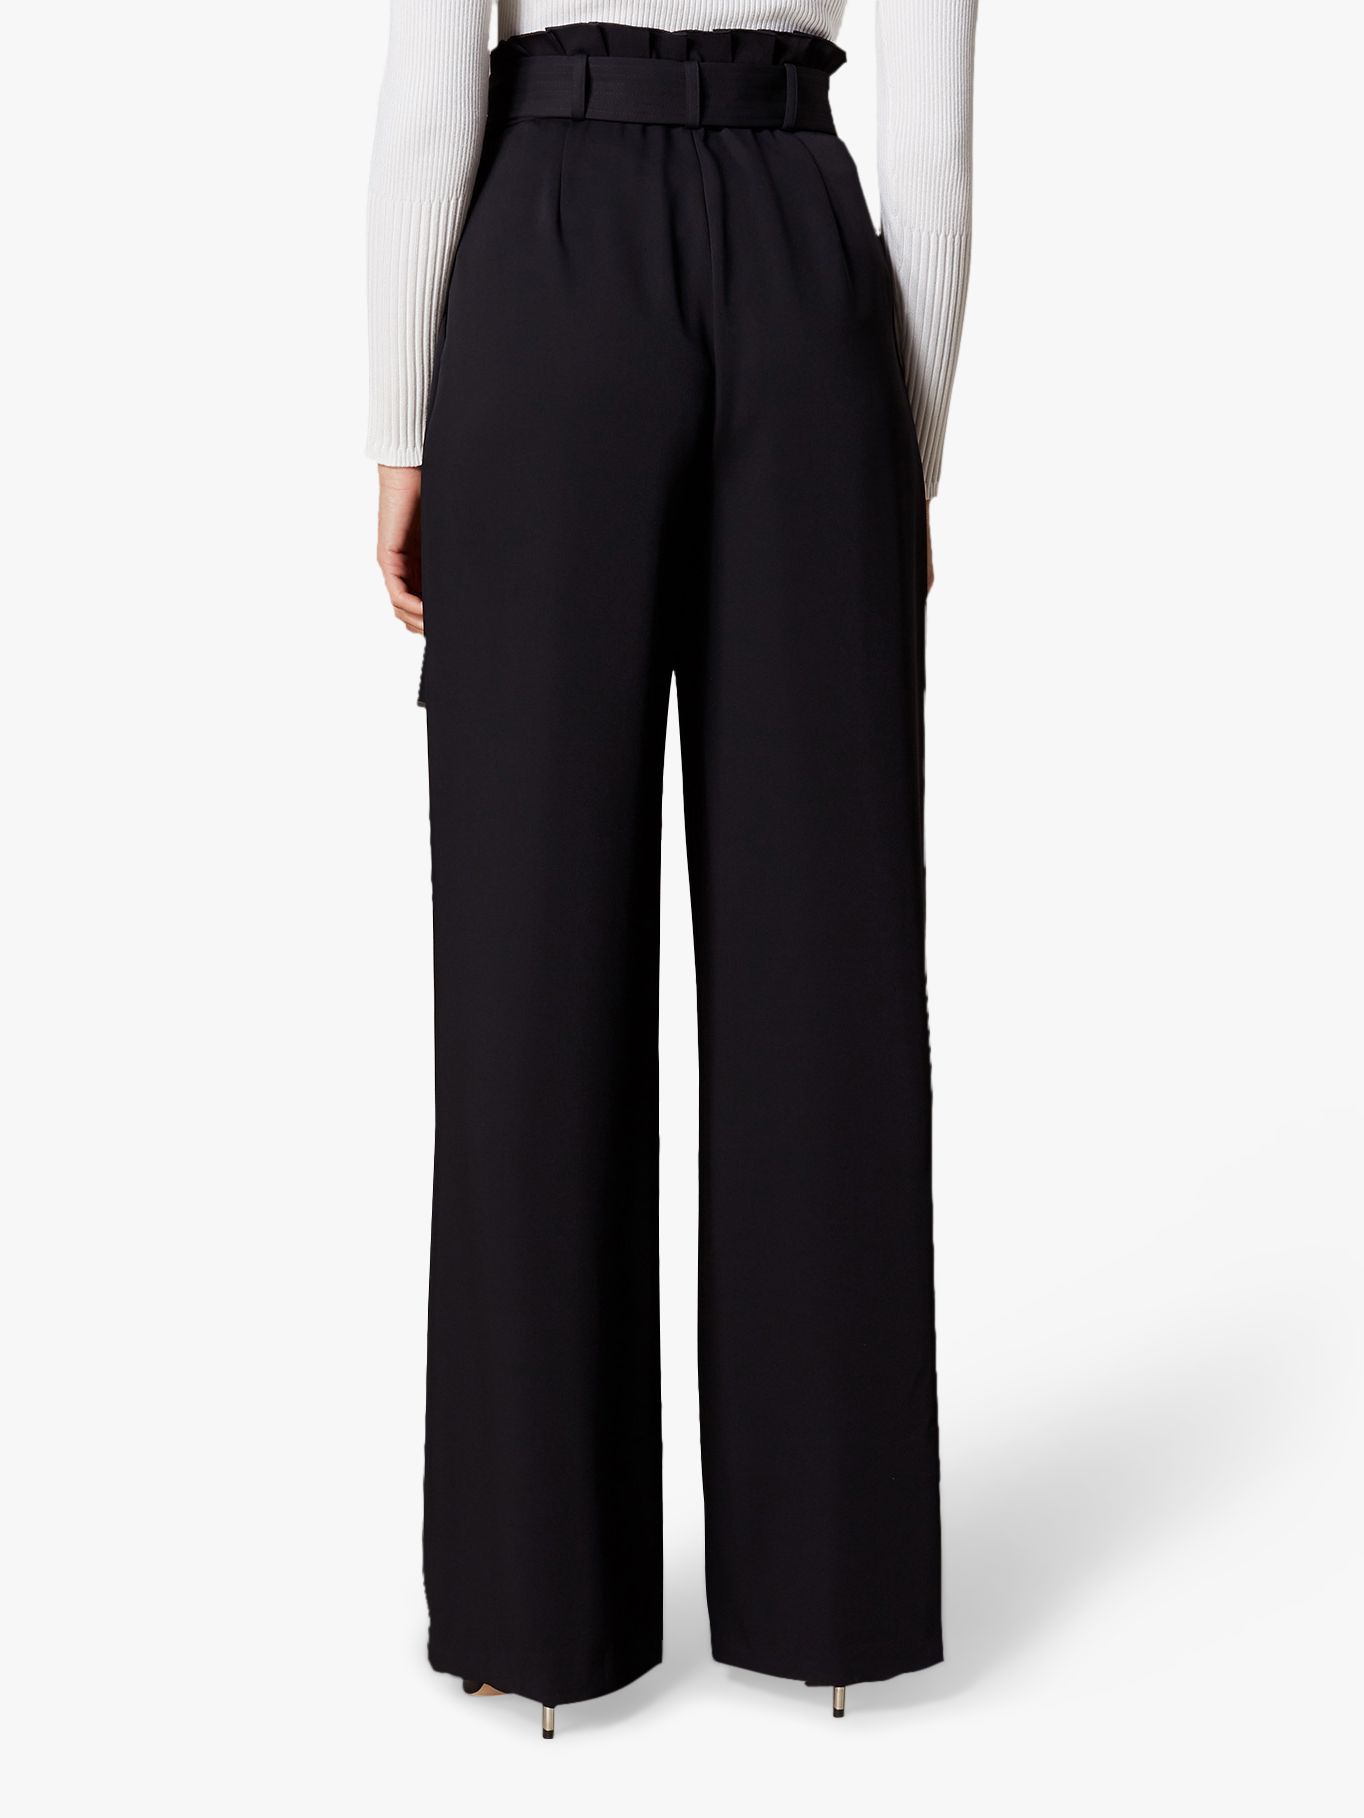 Karen Millen Wide-Leg Tailored Trousers, Black at John Lewis & Partners